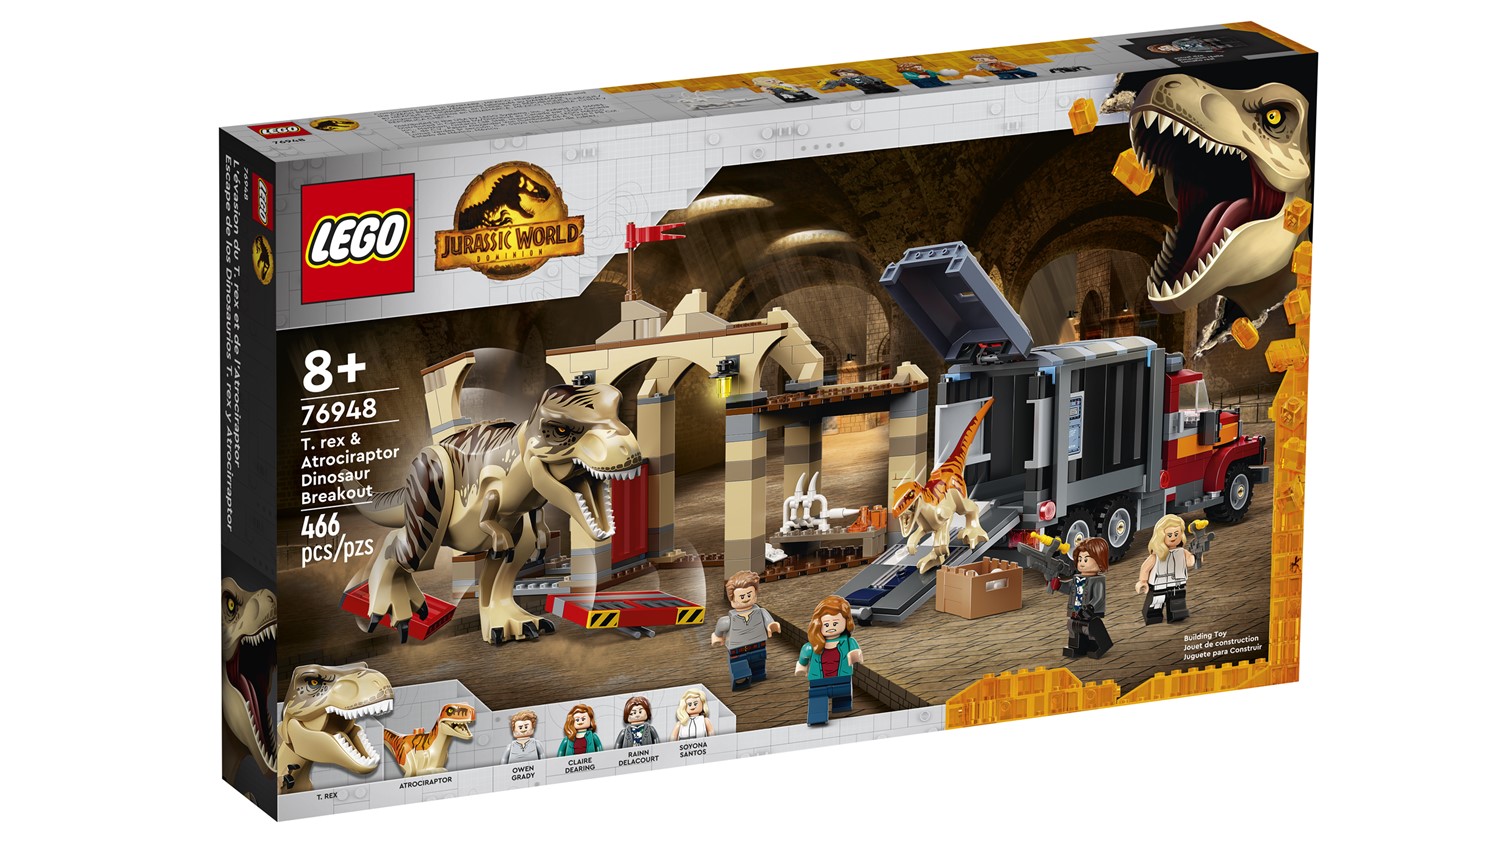 LEGO Jurassic World 76948 ucieczka tyranozaura i atrociraptora